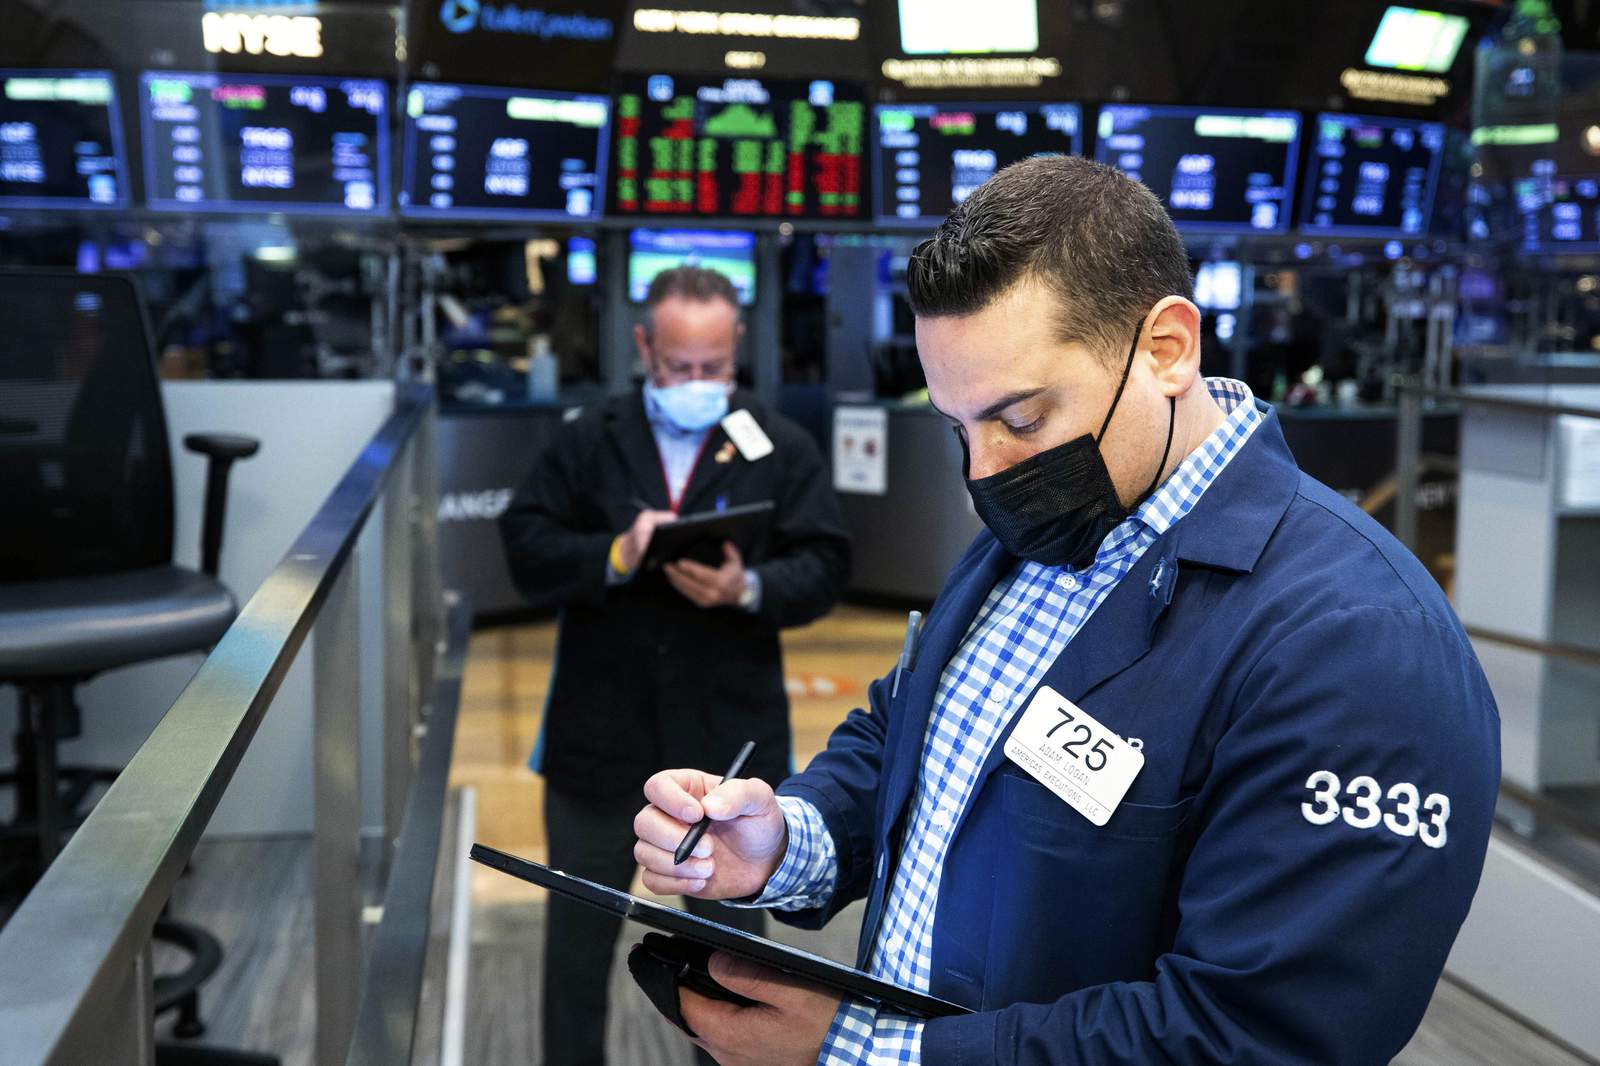 Tech company gains help push S&P 500 to record high